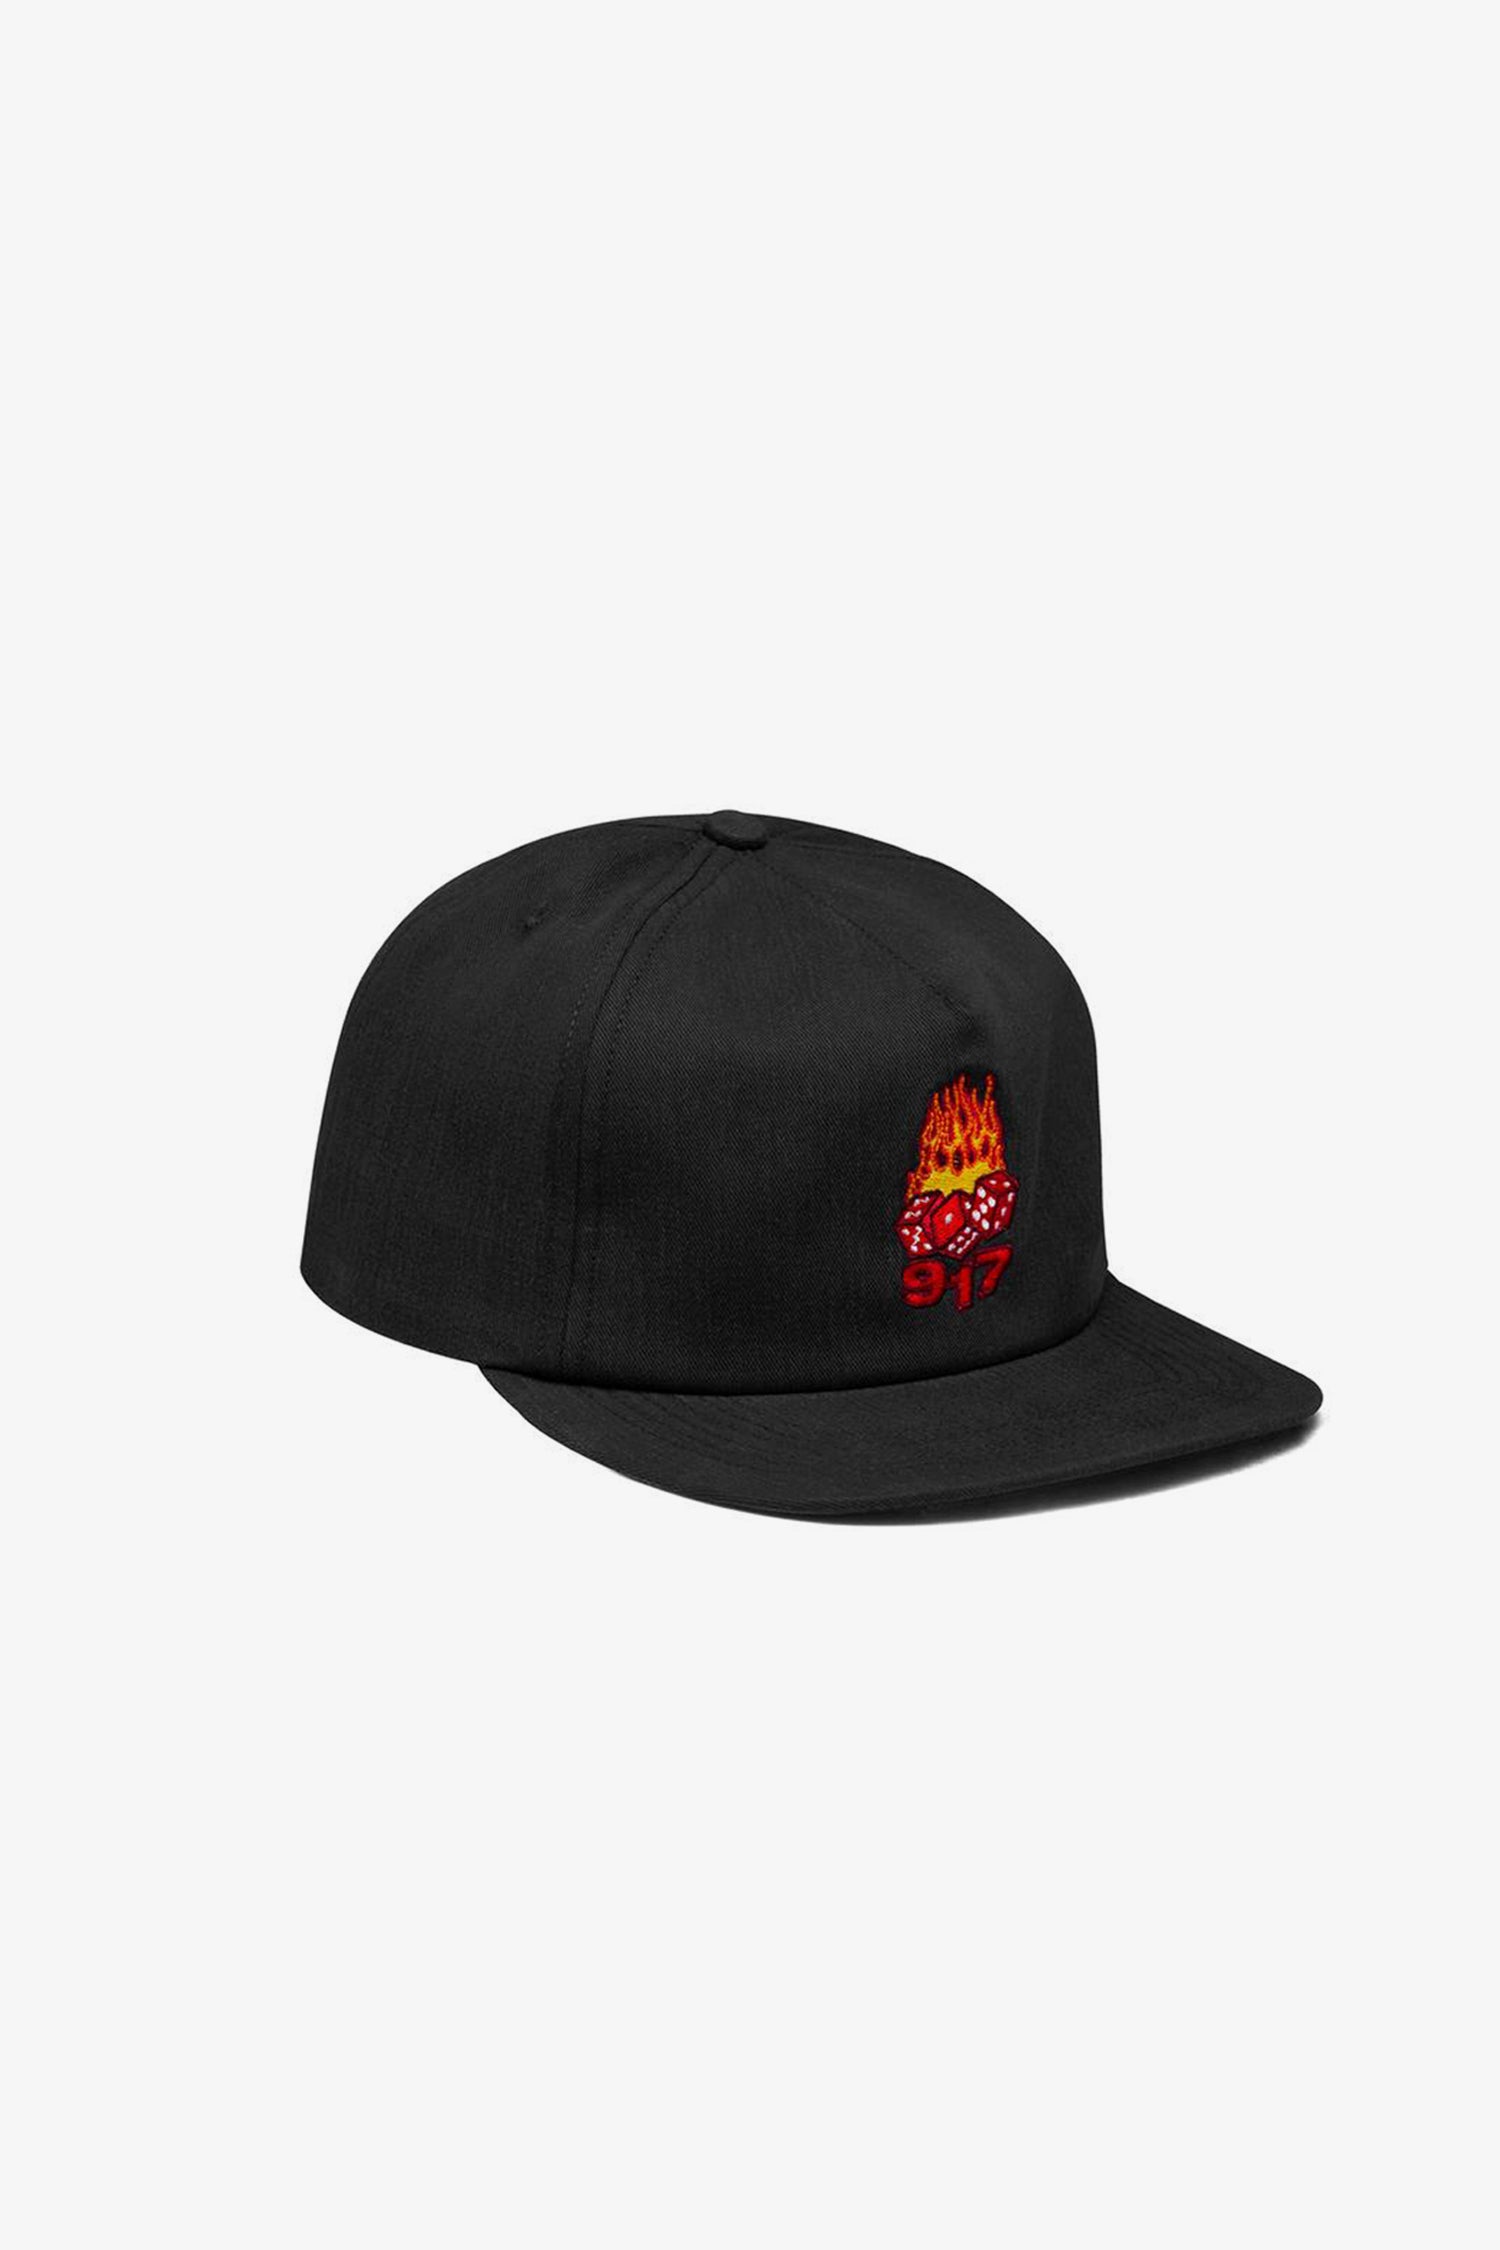 Selectshop FRAME - CALL ME 917 Hot Dice Hat Headwear Dubai